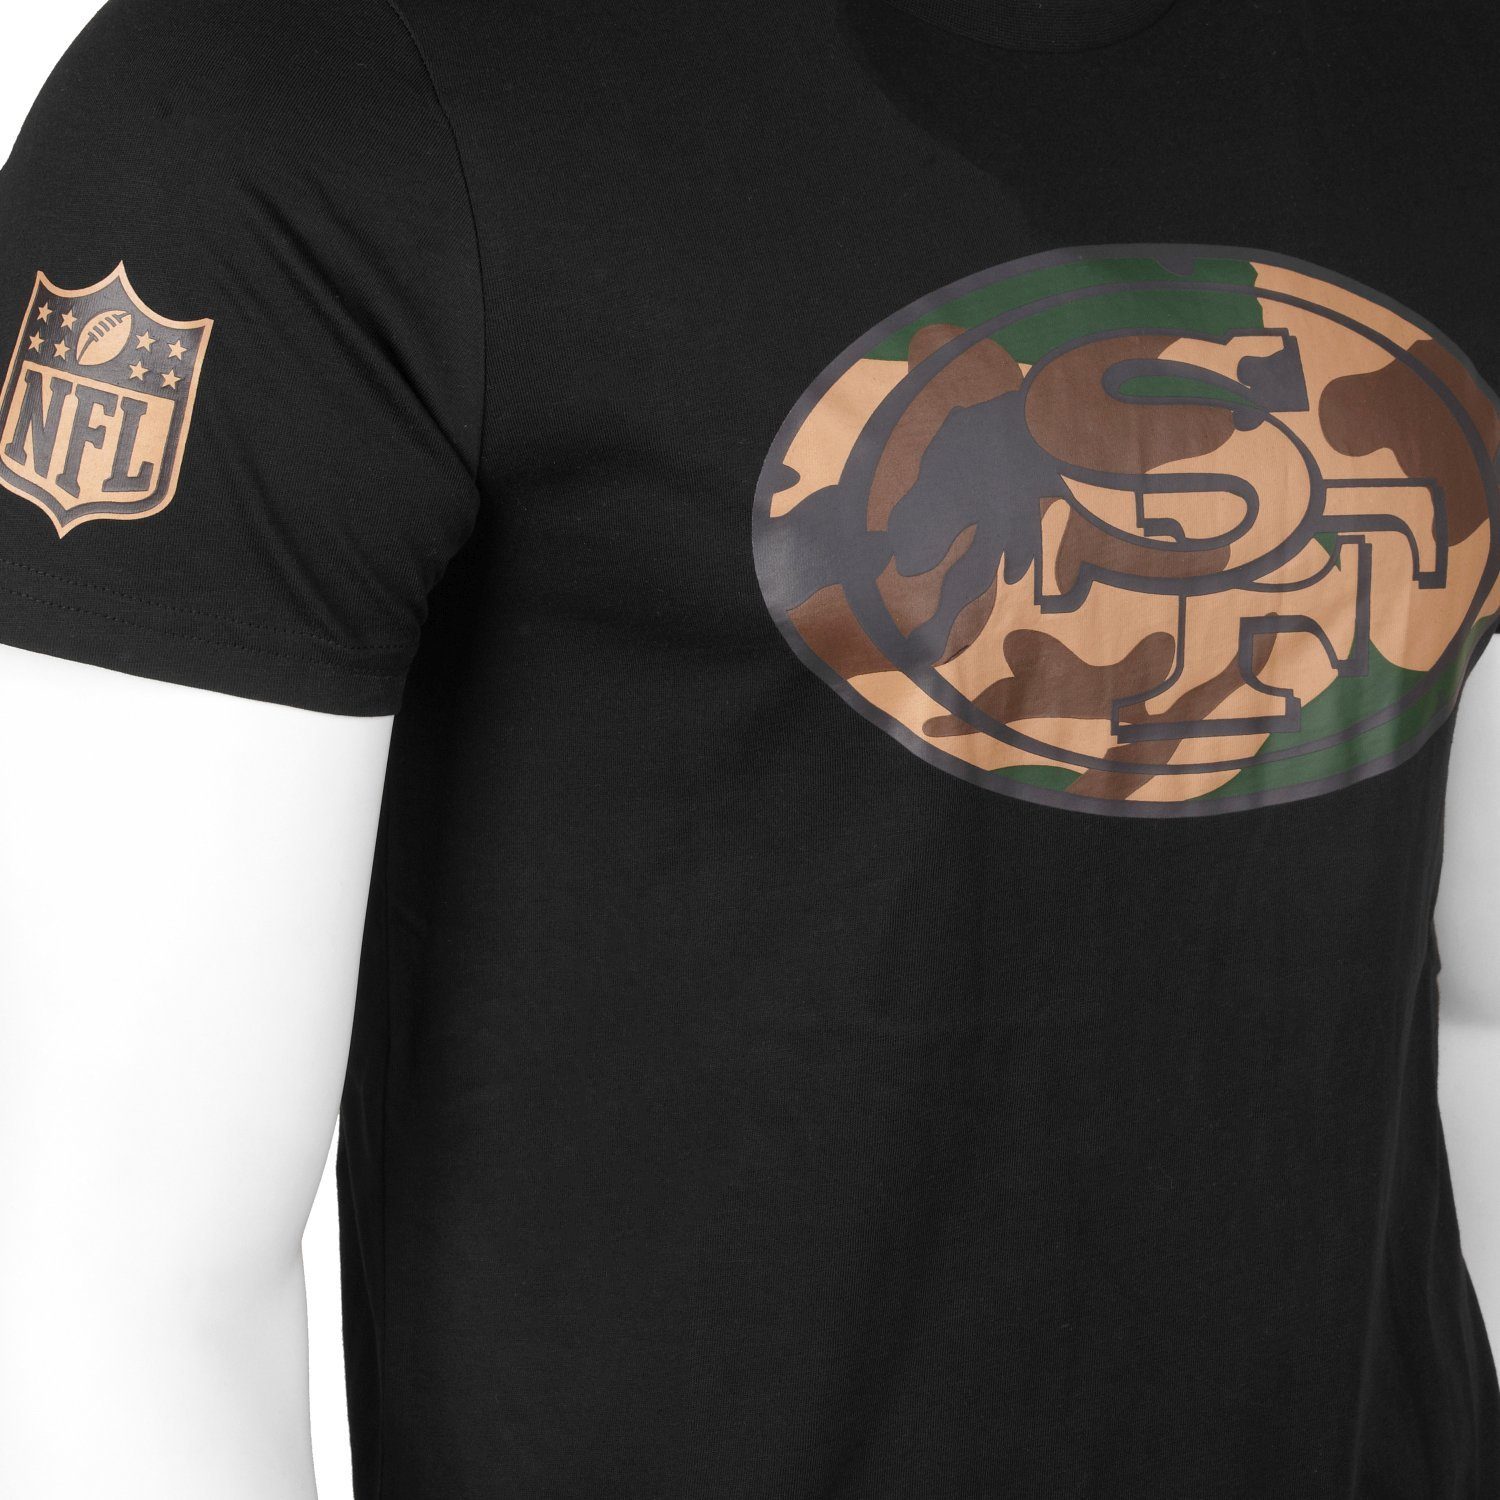 New Print-Shirt Football 49ers NFL Era San Teams Francisco